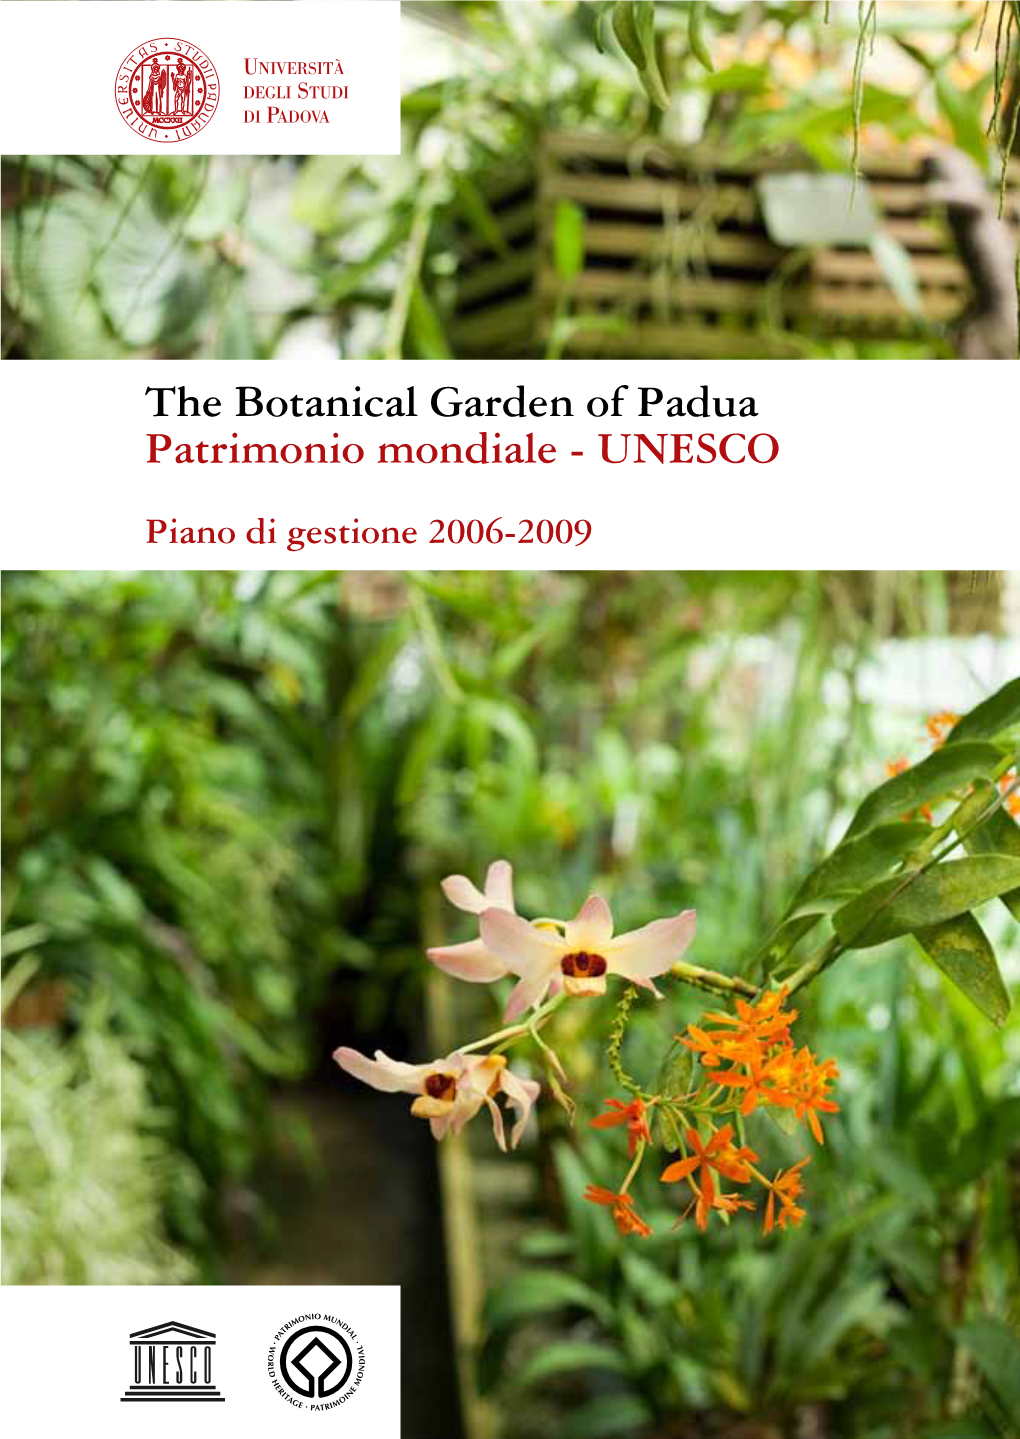 Piano Di Gestione 2006-2009 the Botanical Garden of Padua Patrimonio Mondiale - UNESCO